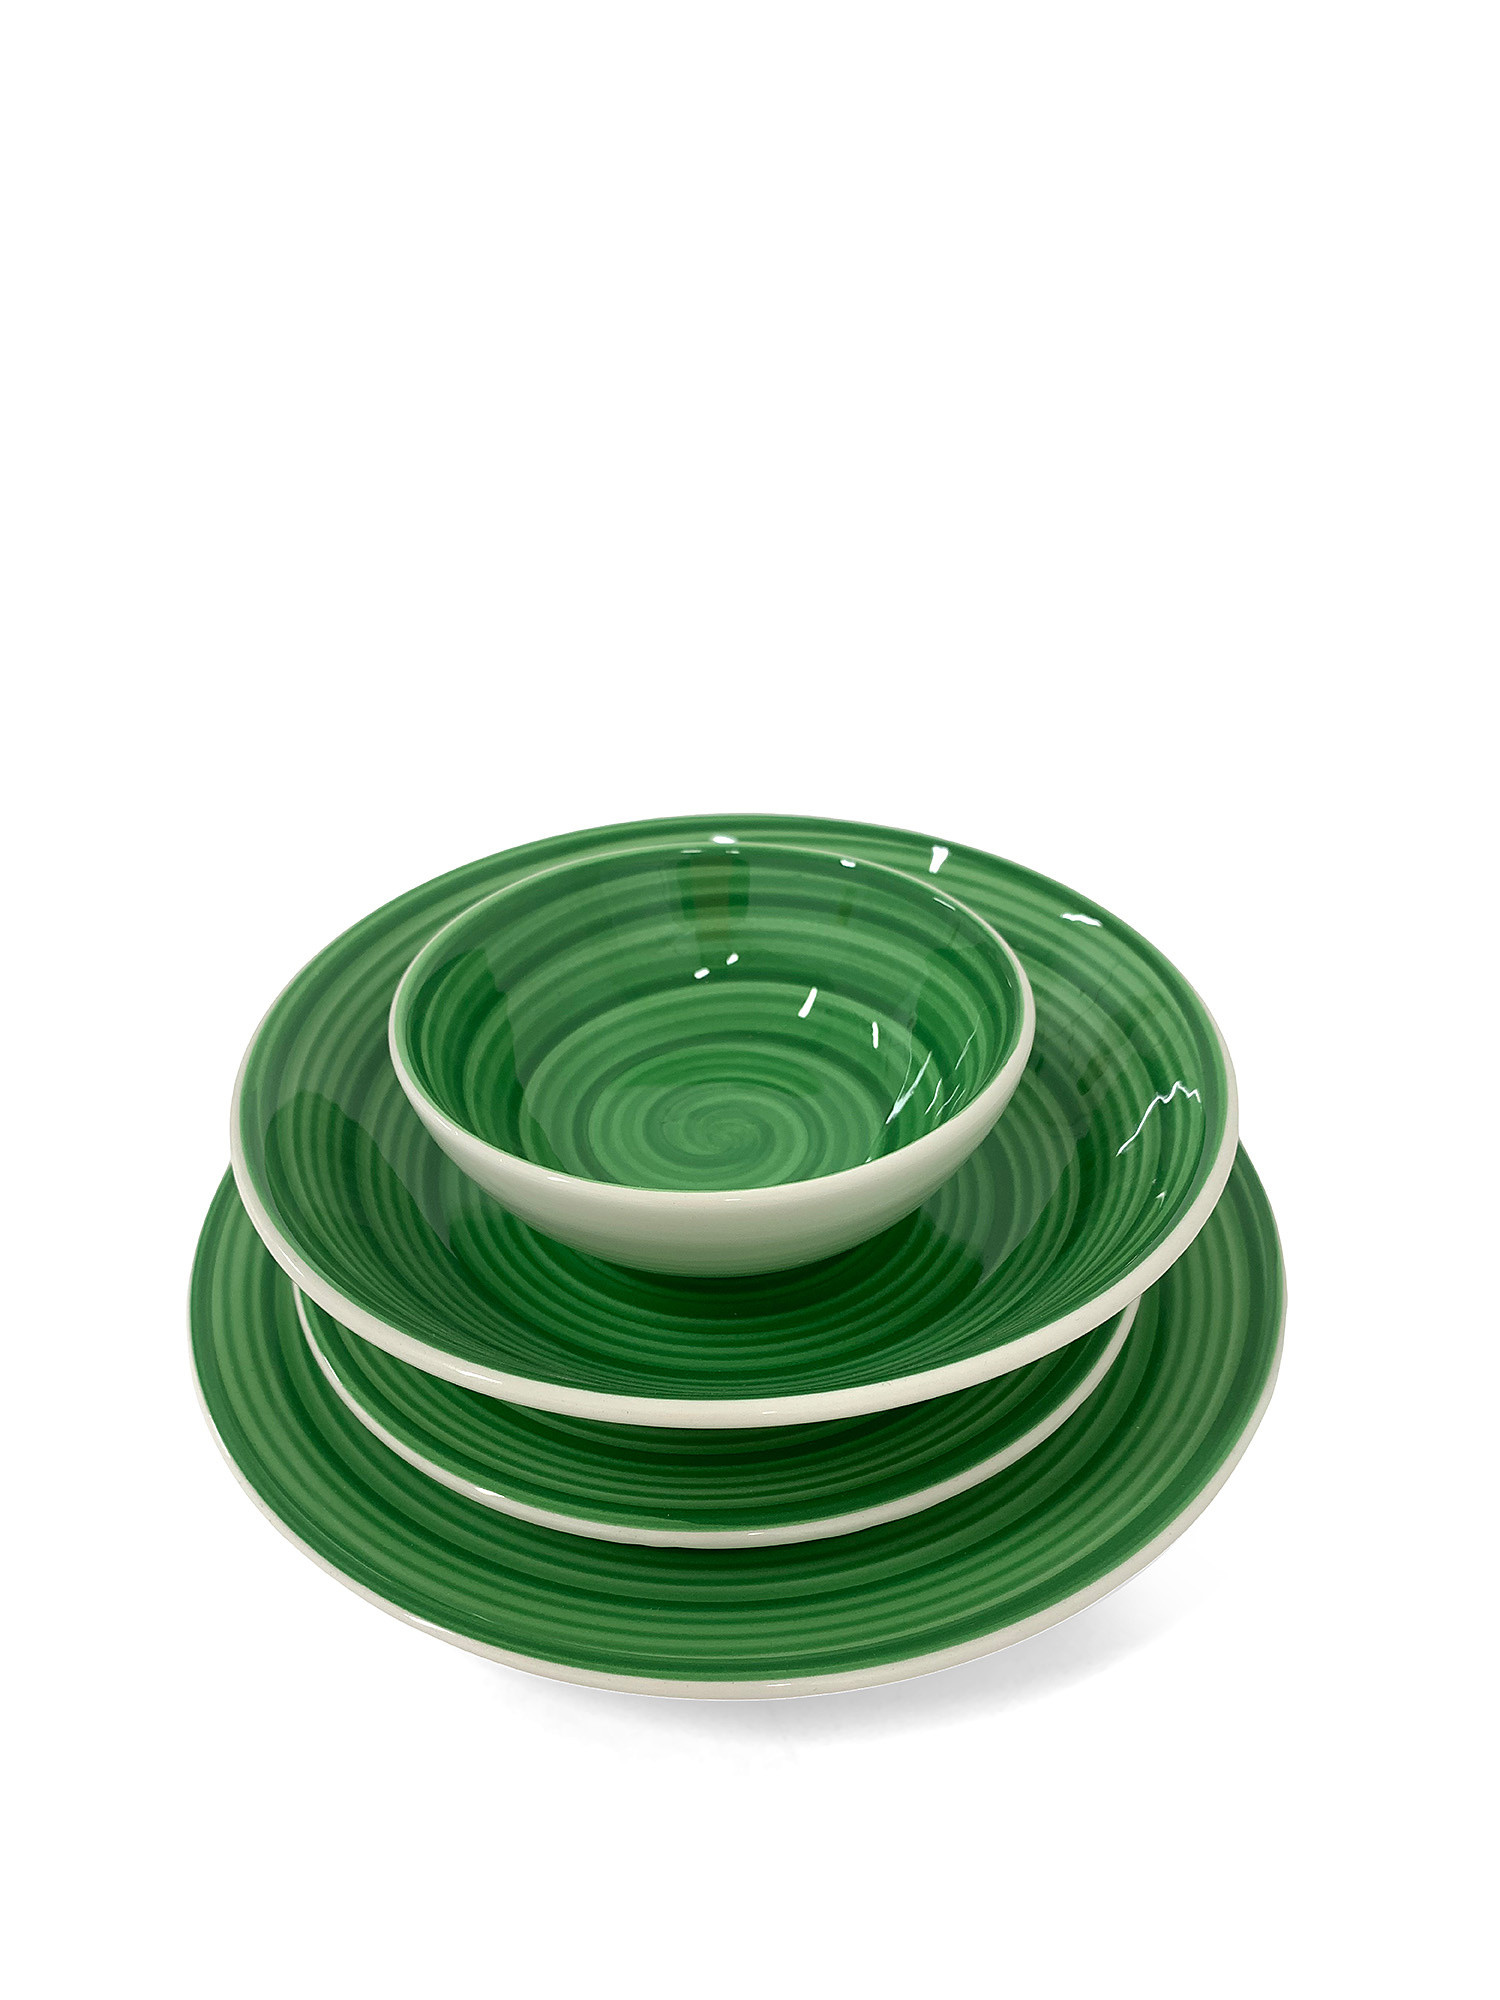 Spiral hand painted ceramic bowl, Green, large image number 1